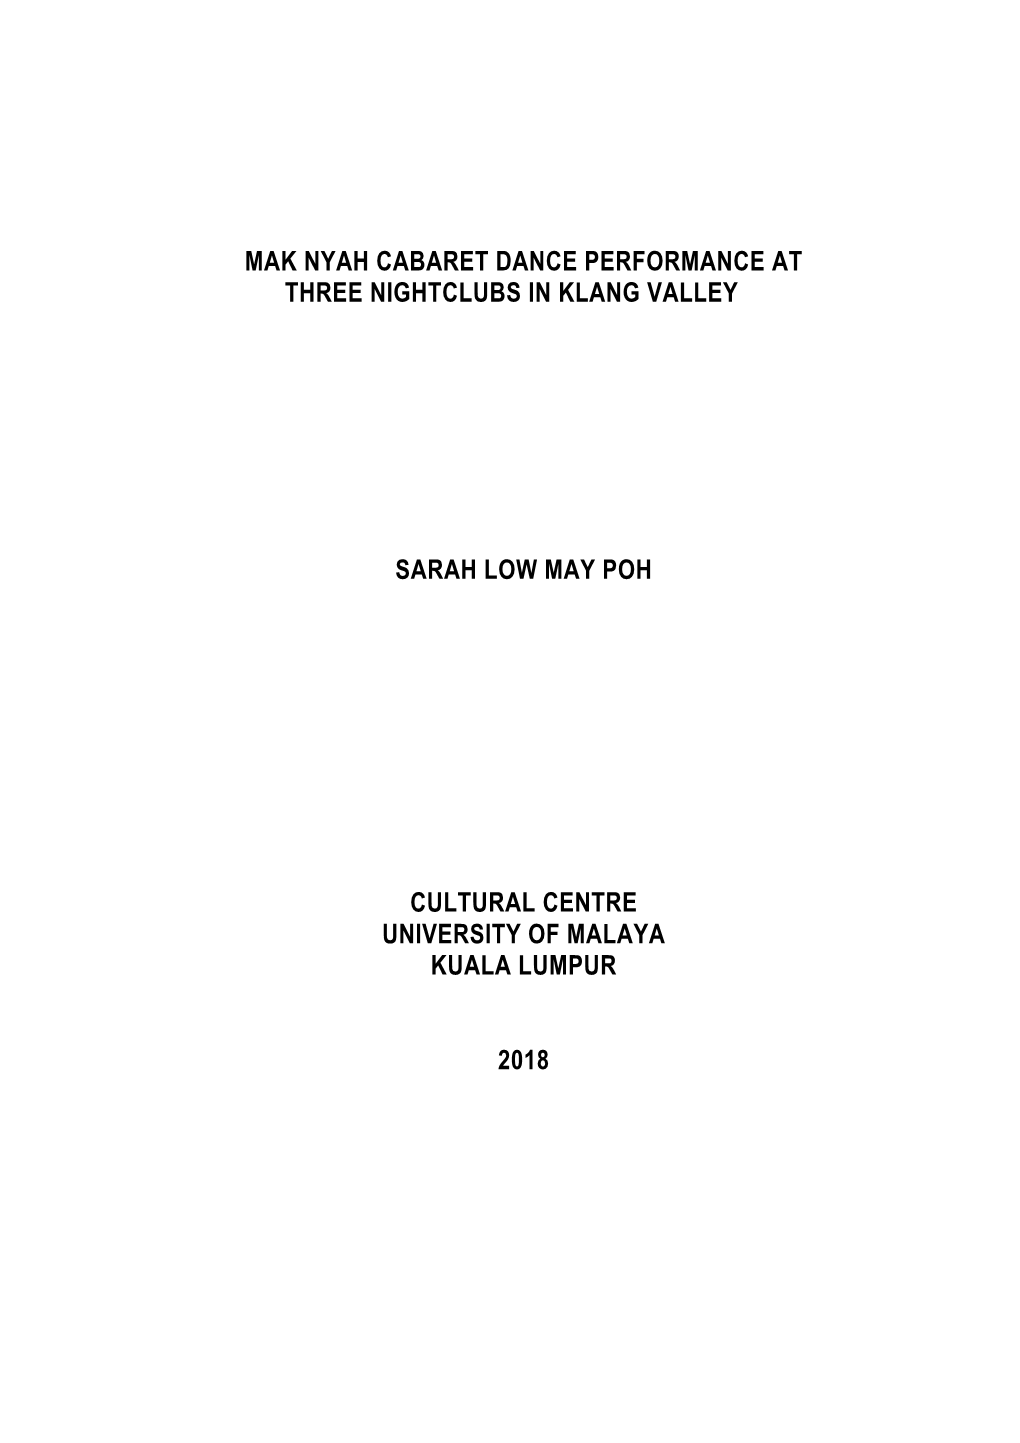 Mak Nyah Cabaret Dance Performance at Three Nightclubs in Klang Valley